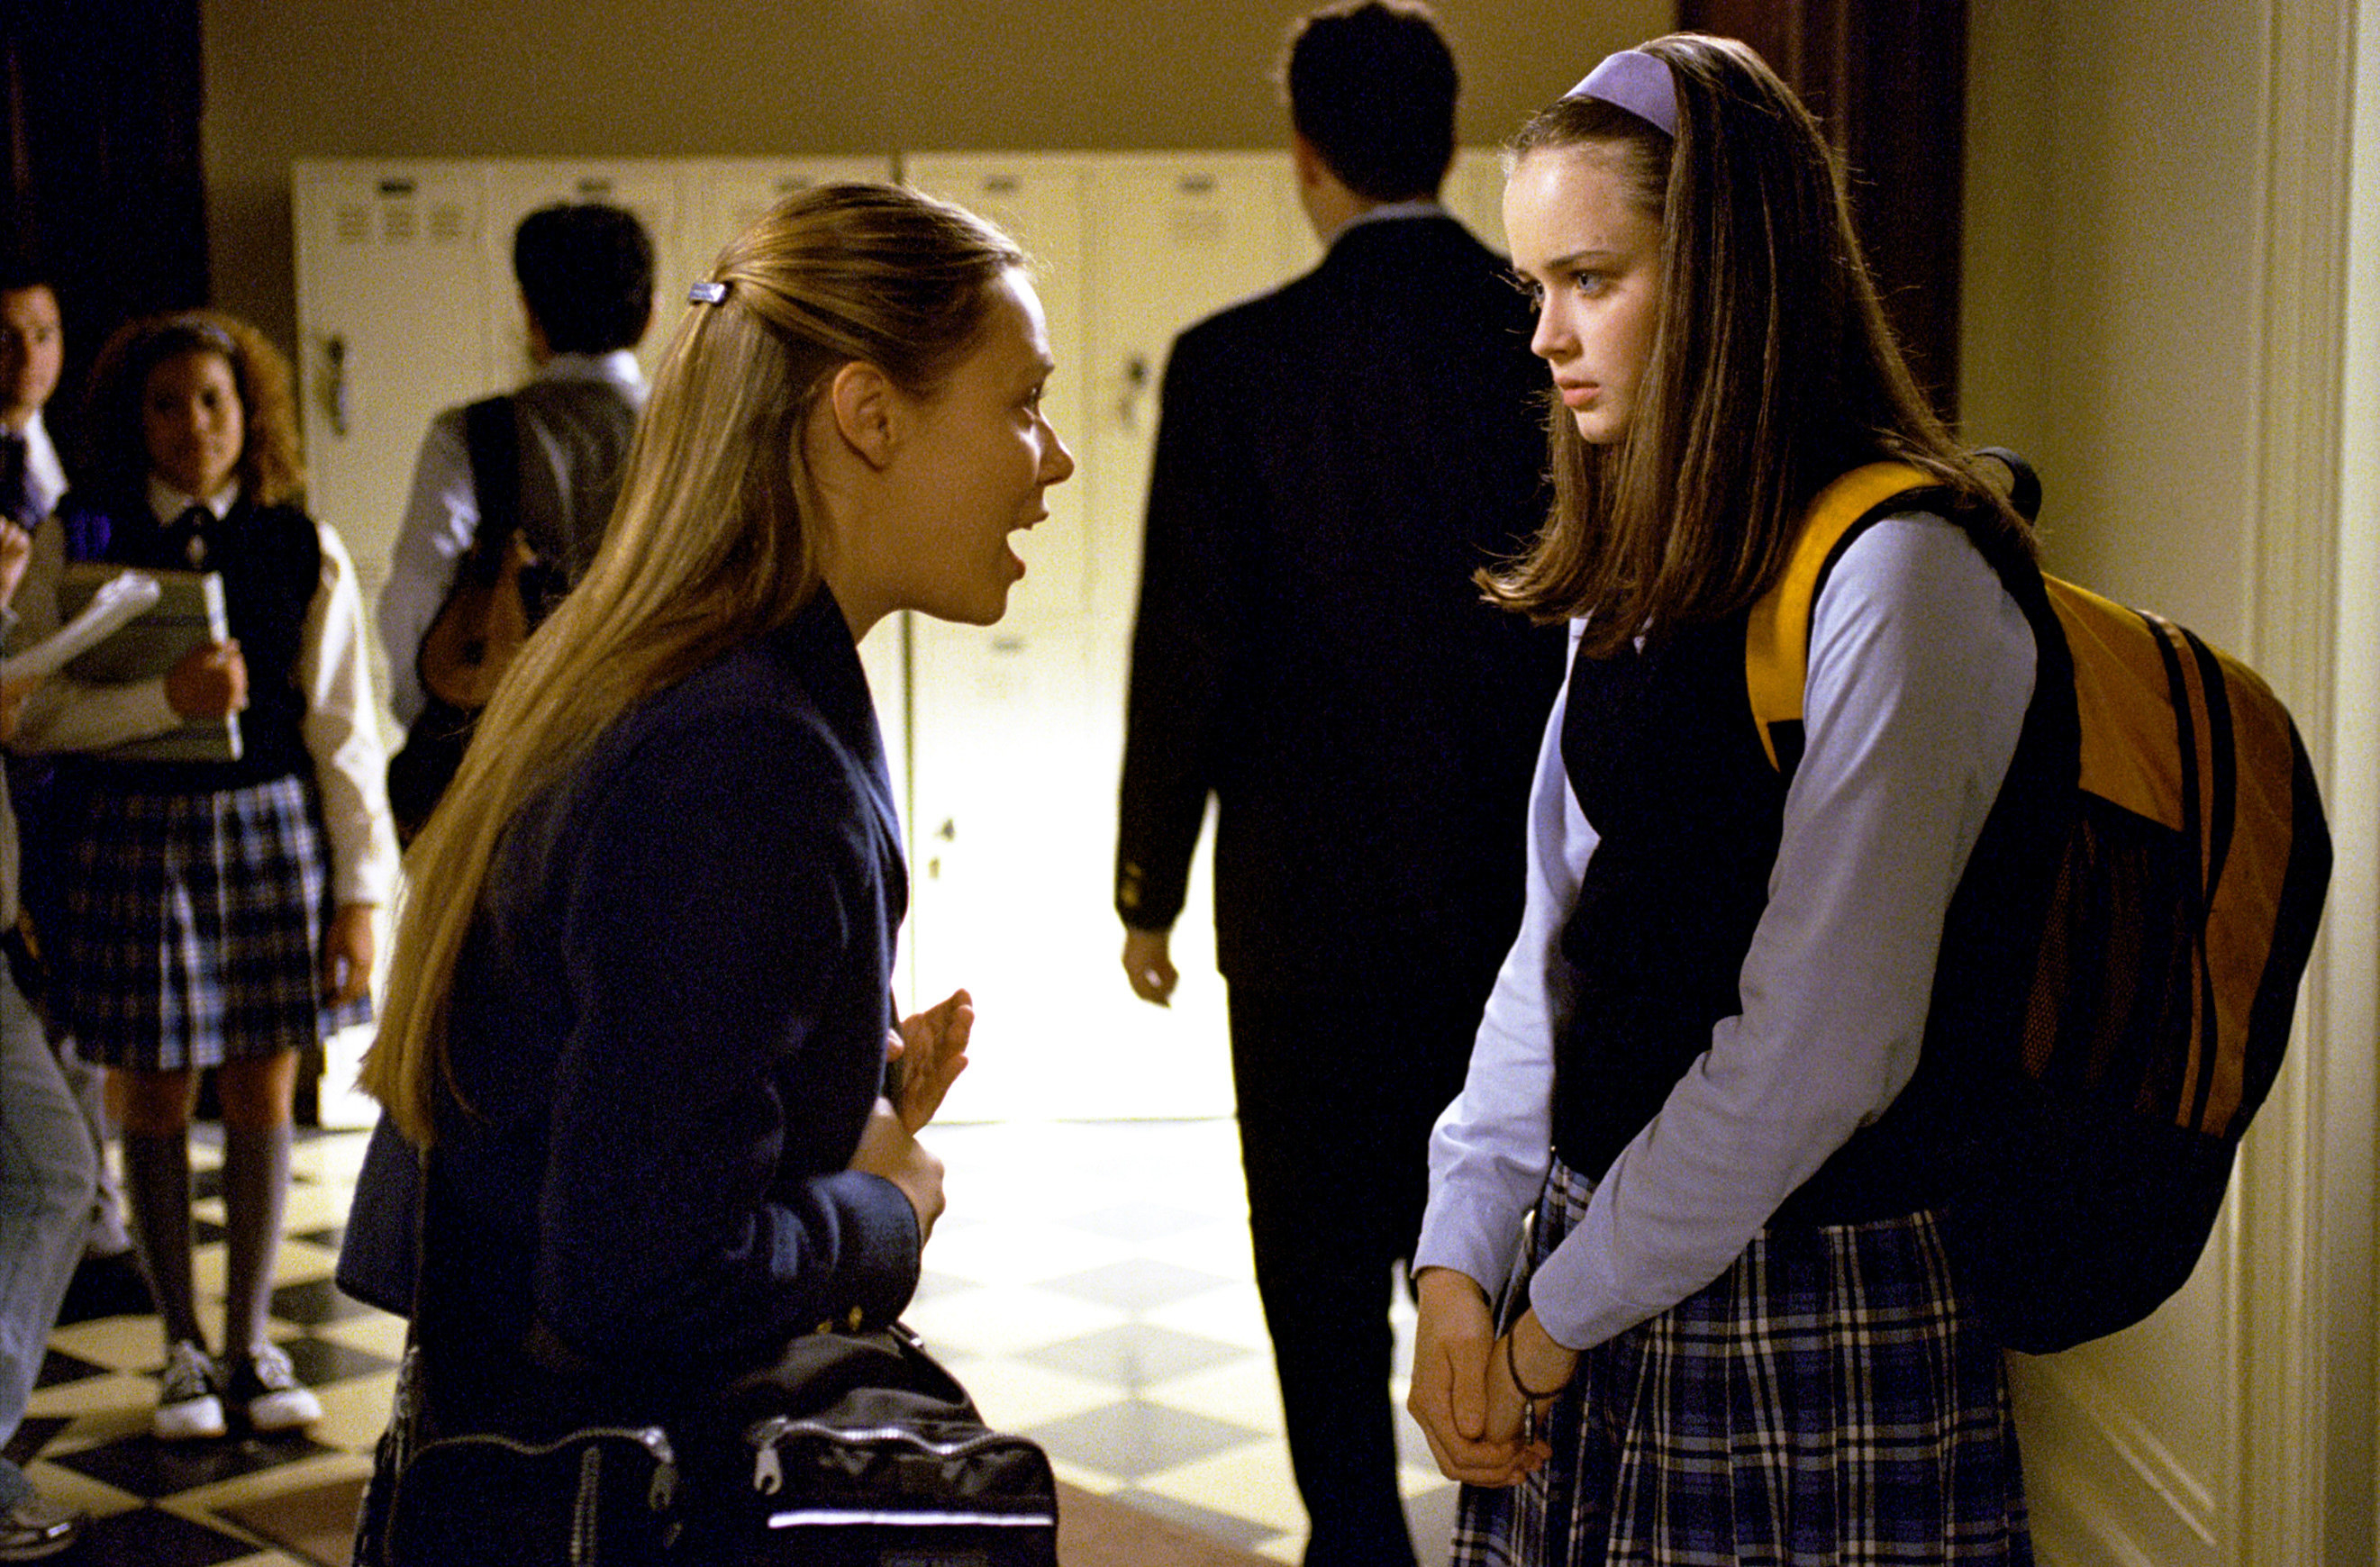 A blonde teenage girl yells at a brunette teenage girl. They both wear school uniforms.